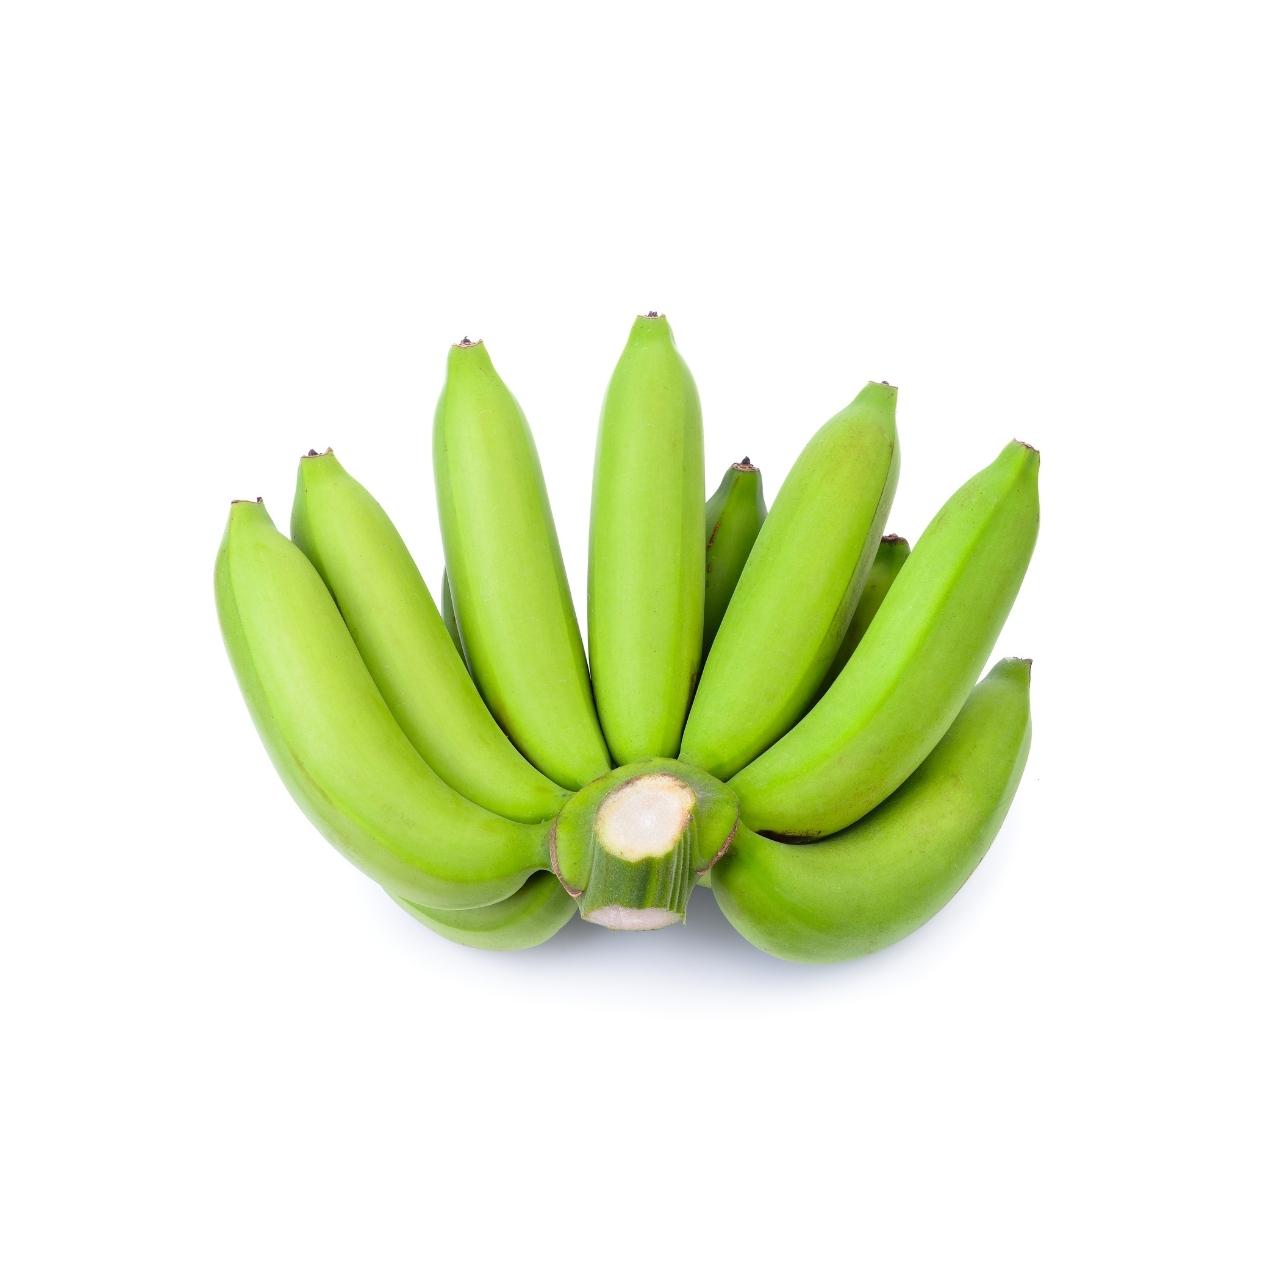 Supply Fresh Green Cavendish Banana With Premium Export Quality